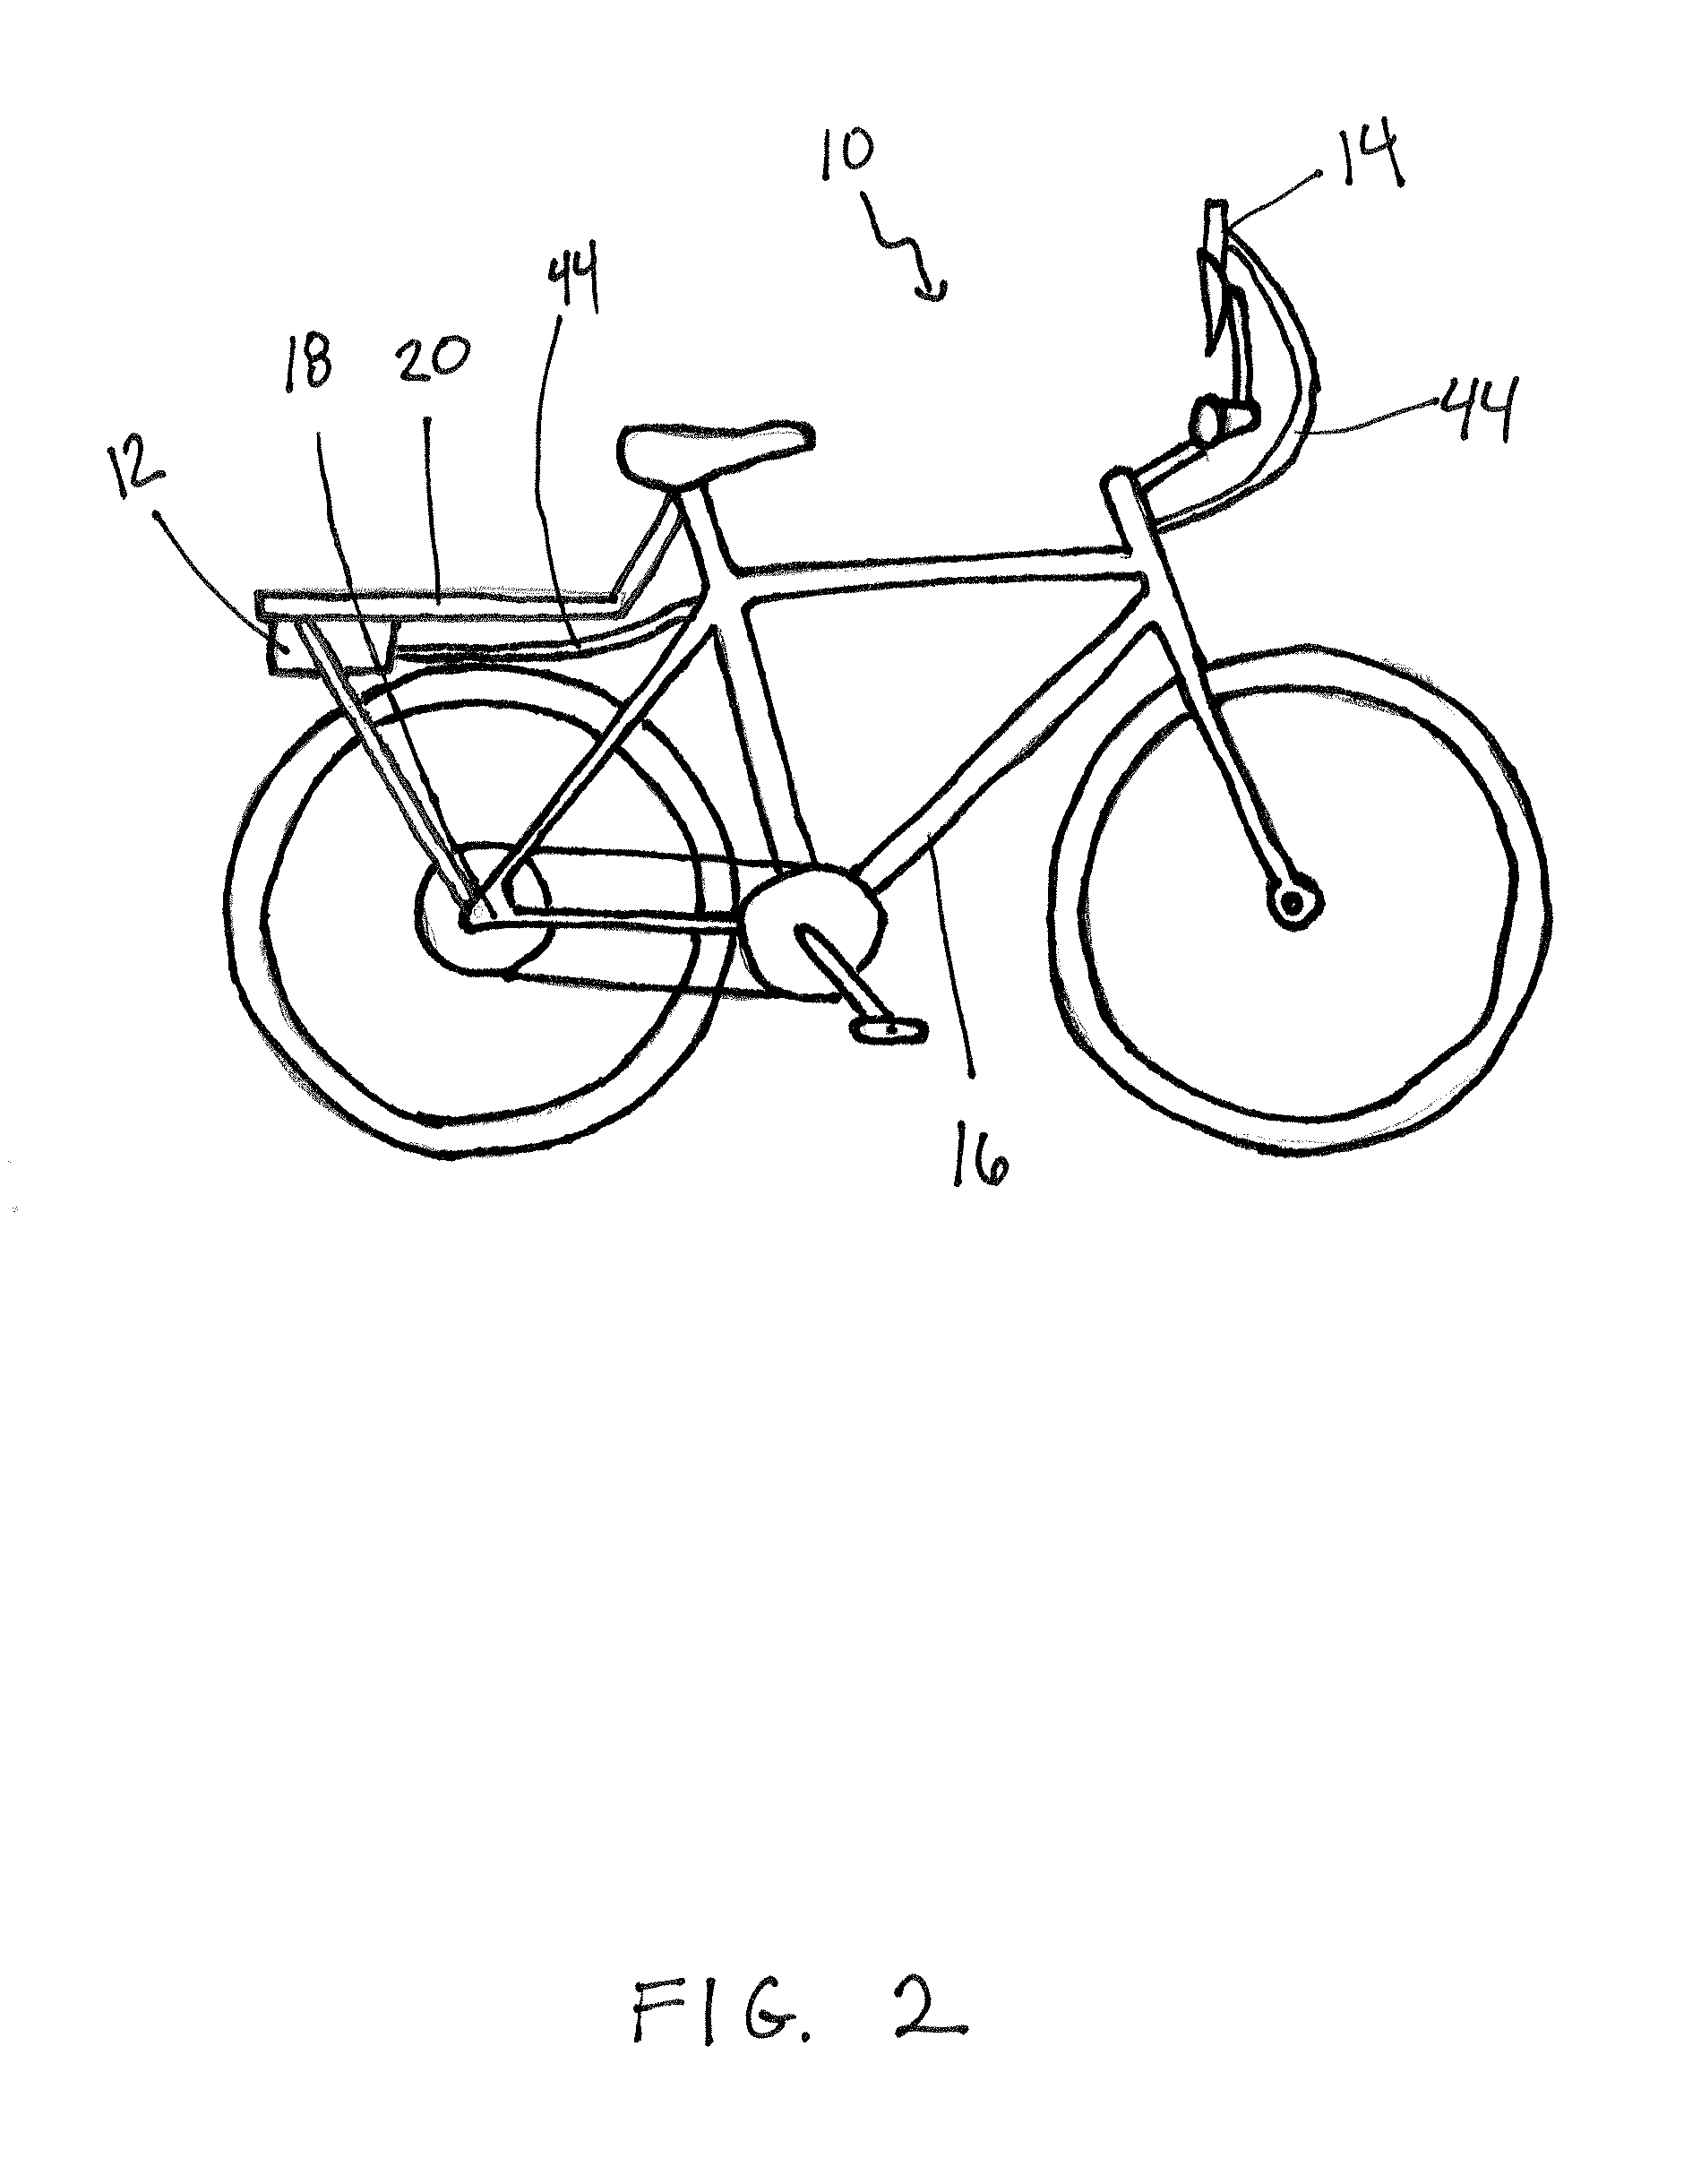 Bicycle Warning Device